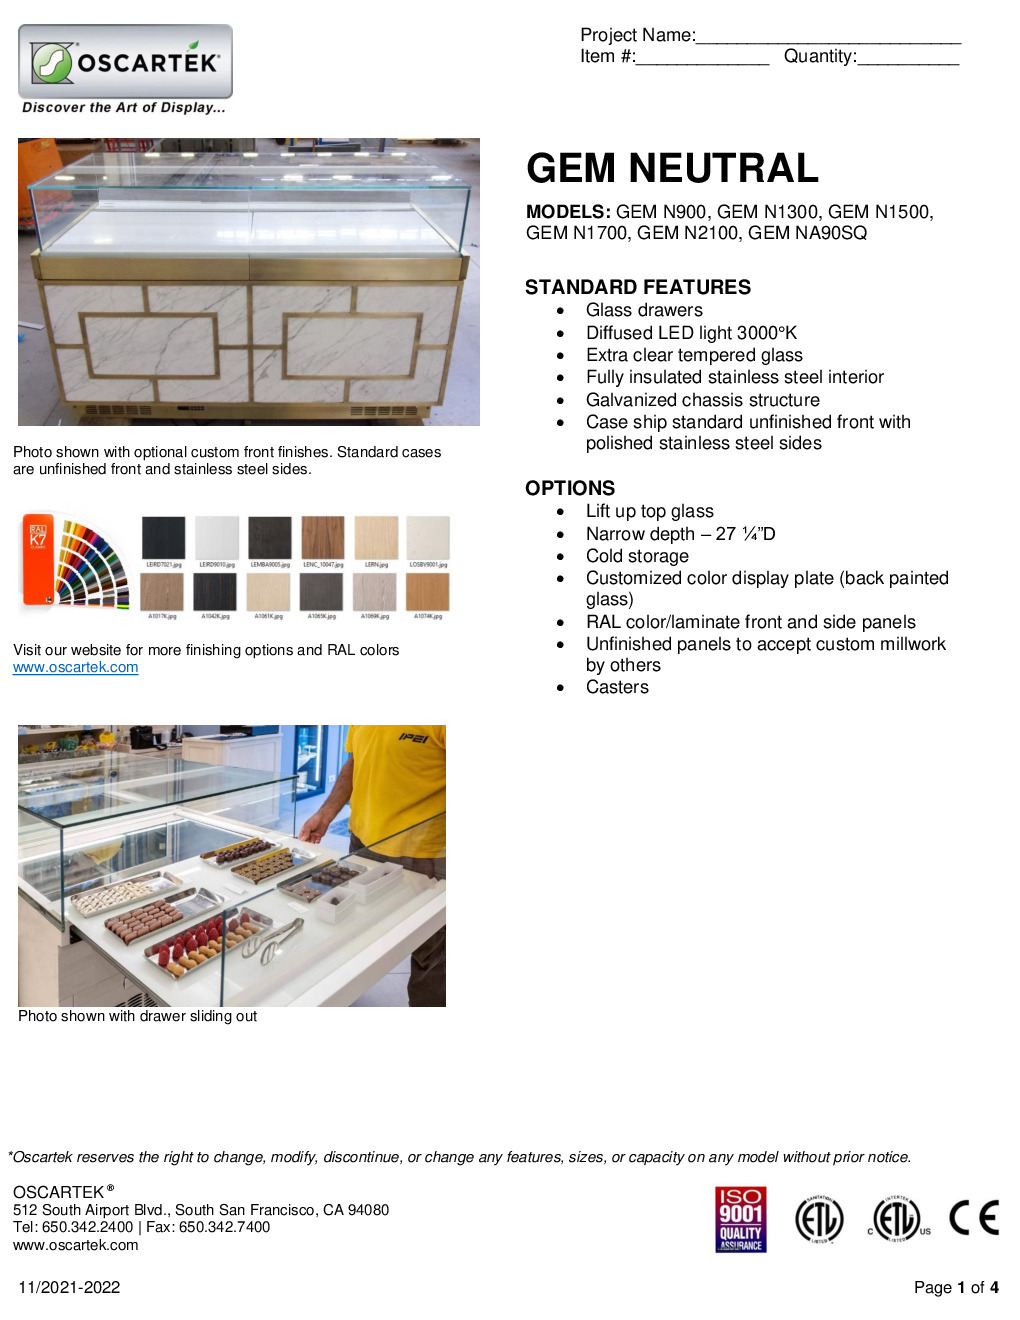 Oscartek GEM N1700 Non-Refrigerated Bakery Display Case